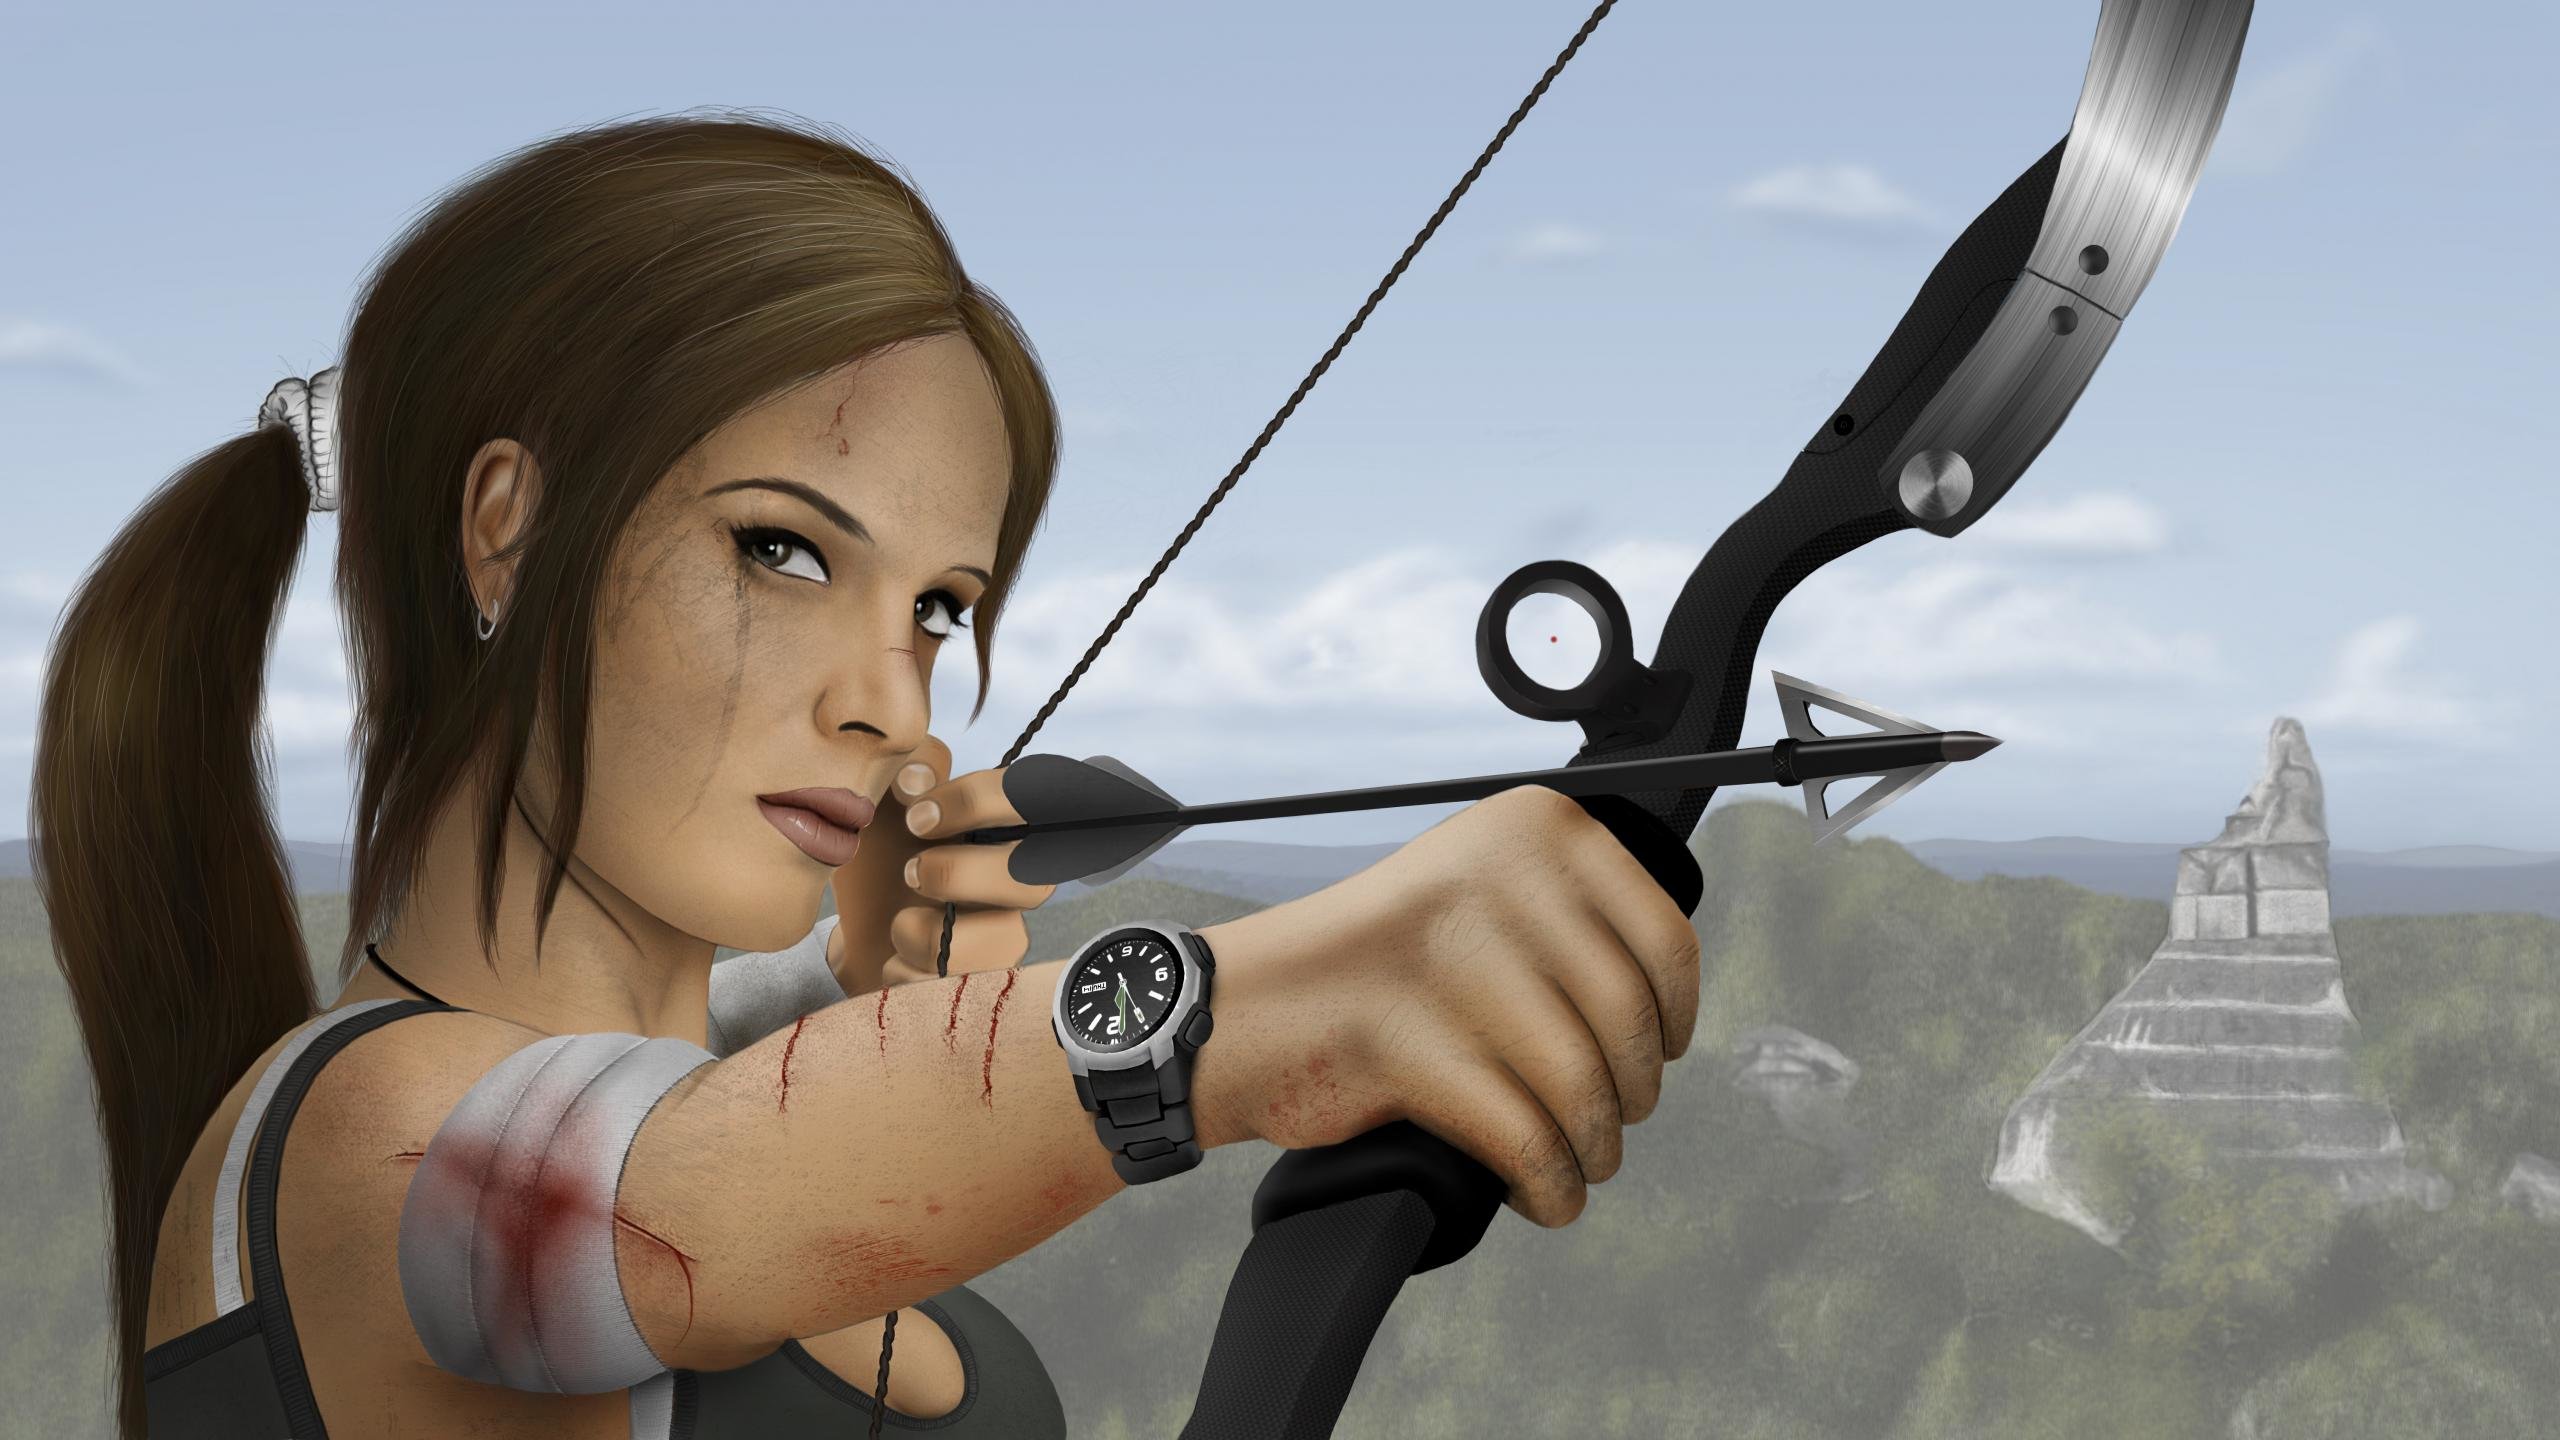 Awesome Tomb Raider (Lara Croft) free wallpaper ID:437194 for hd 2560x1440 computer